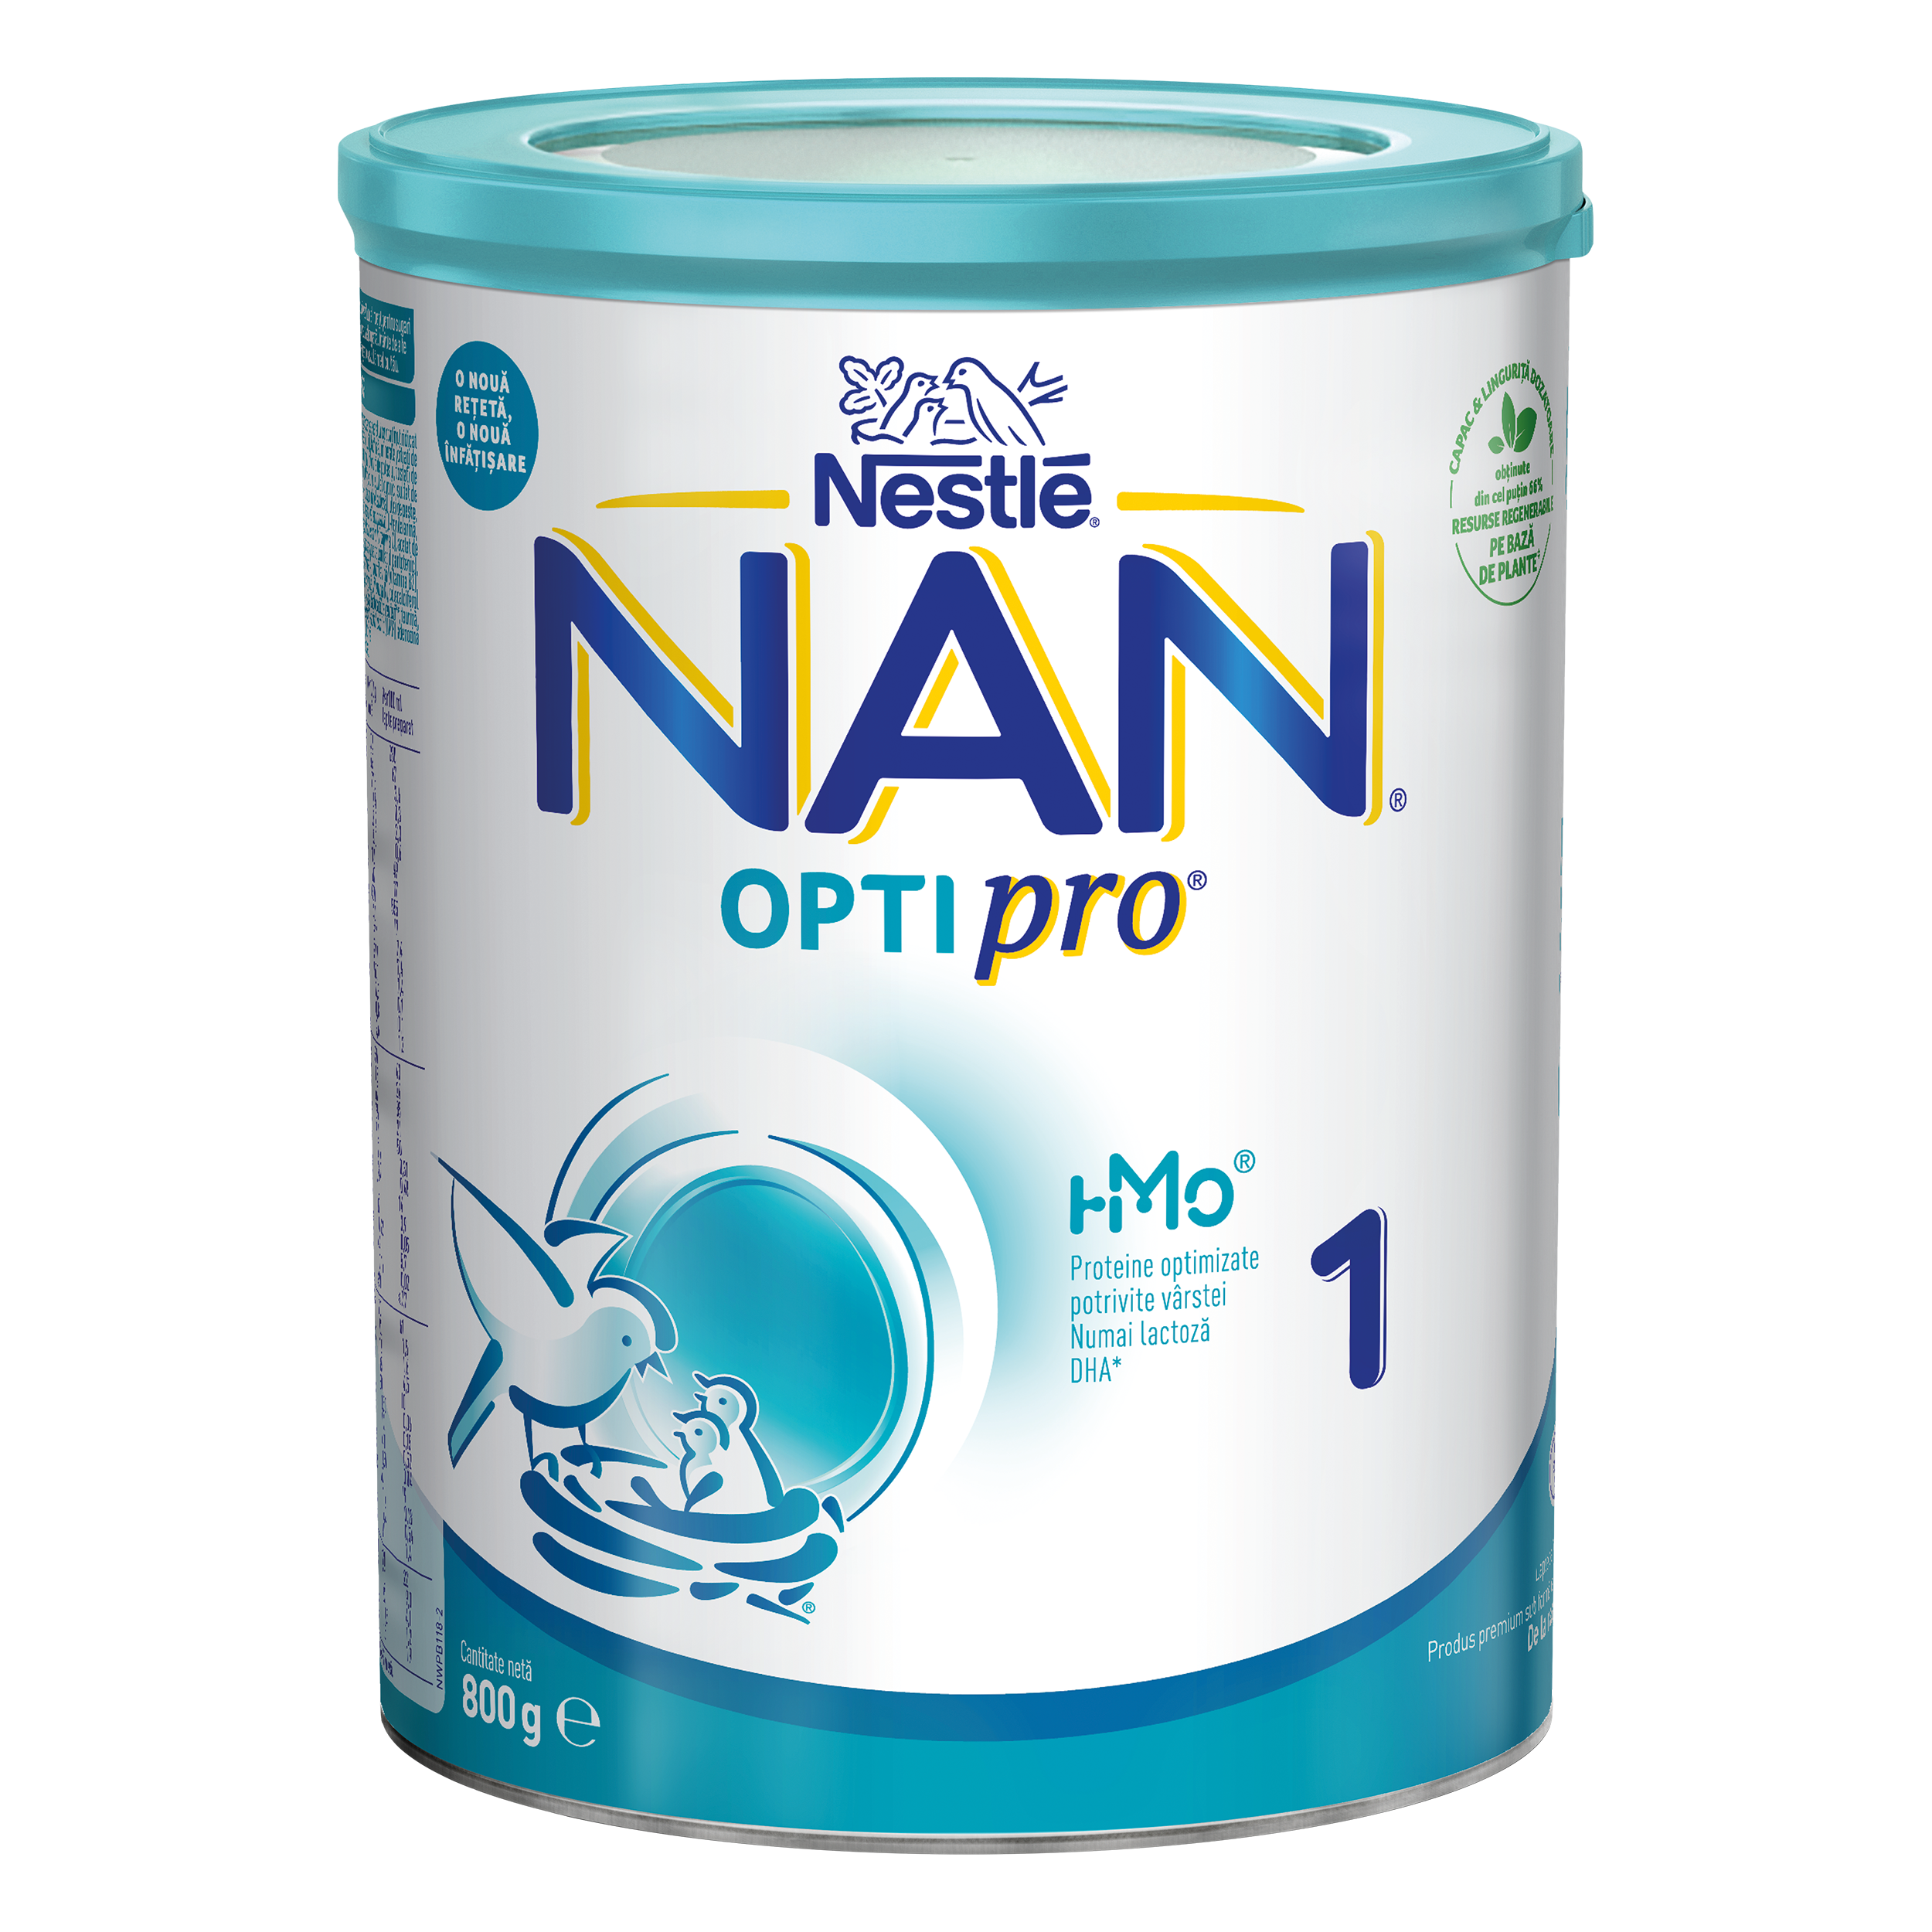 Lapte - Nestle Nan 1 Optipro hmo 800g, de la nastere, sinapis.ro